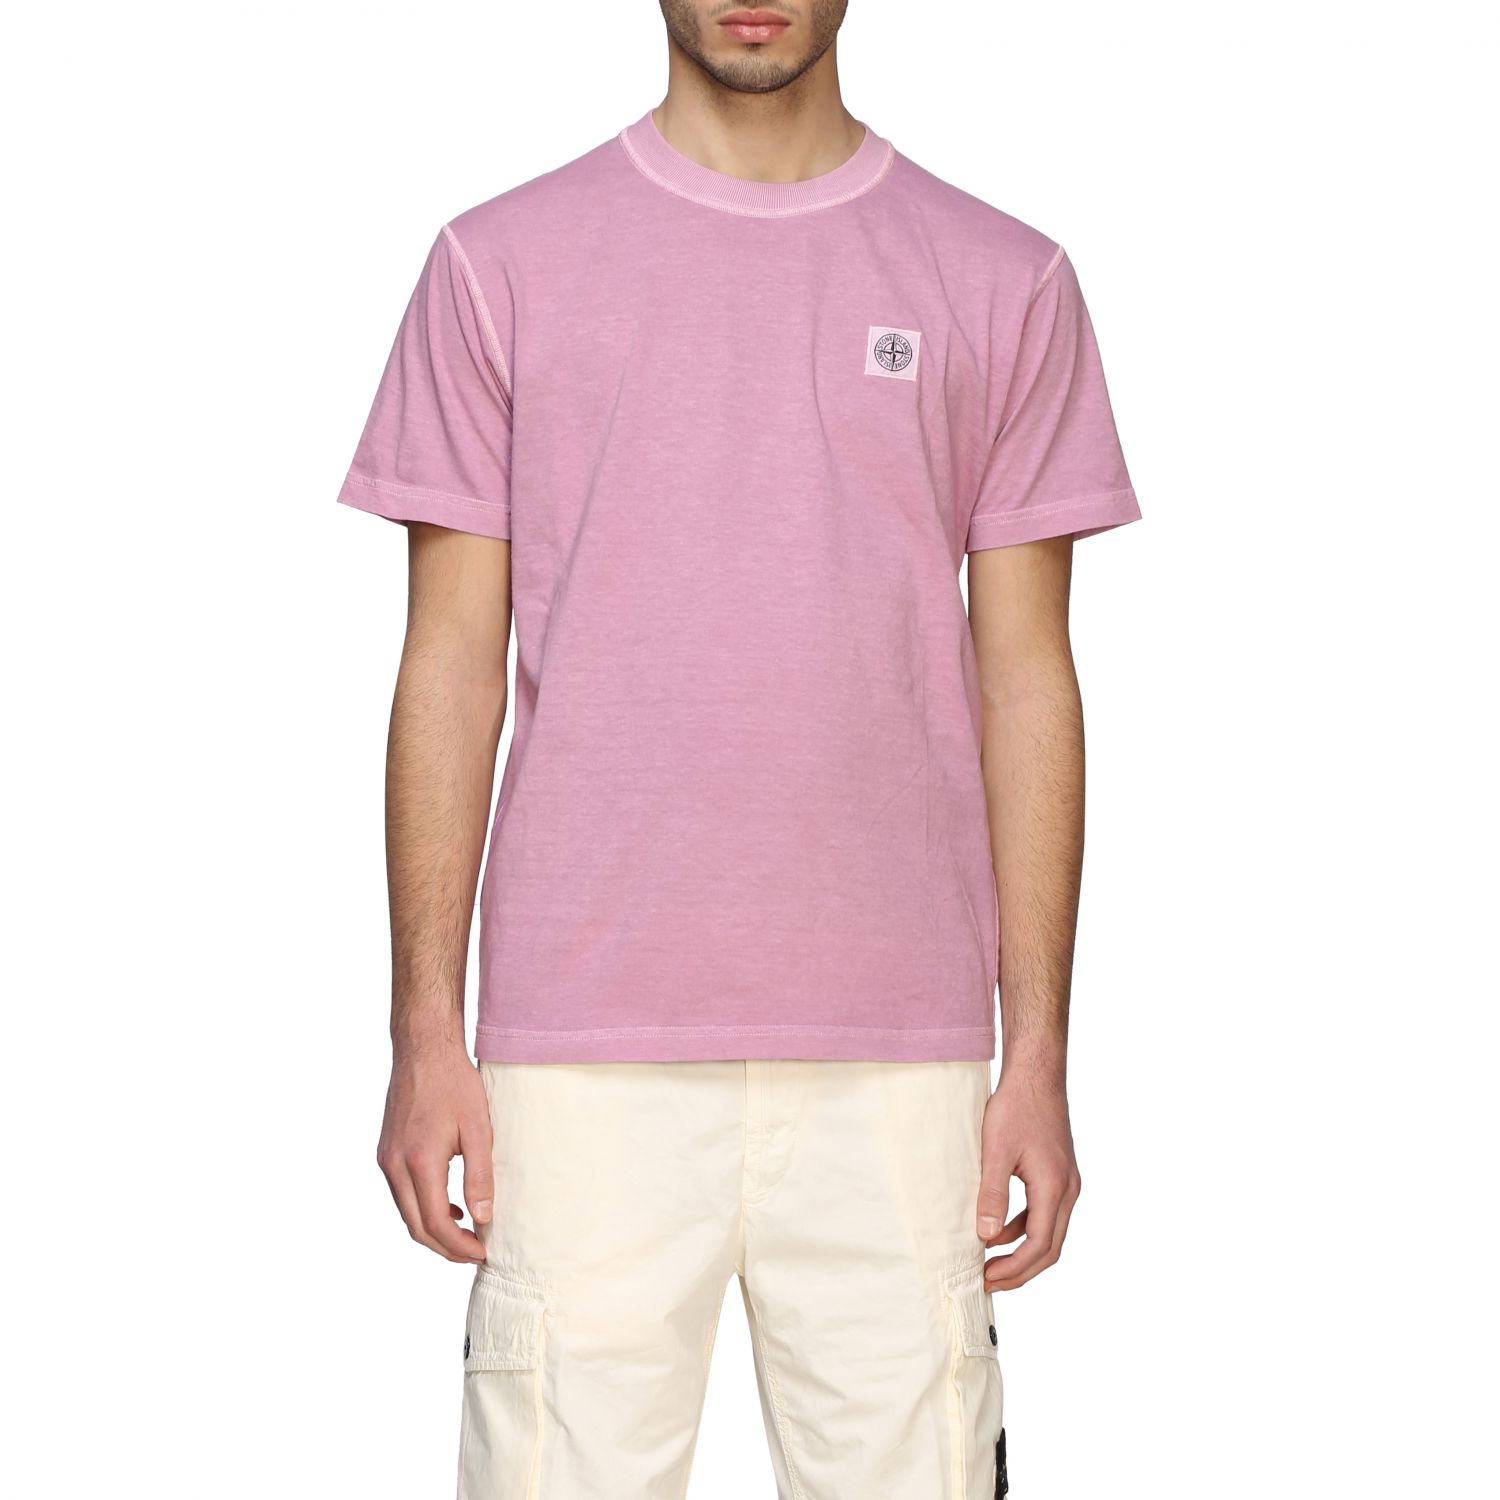 STONE ISLAND: short-sleeved T-shirt with logo - Pink | T-Shirt Stone